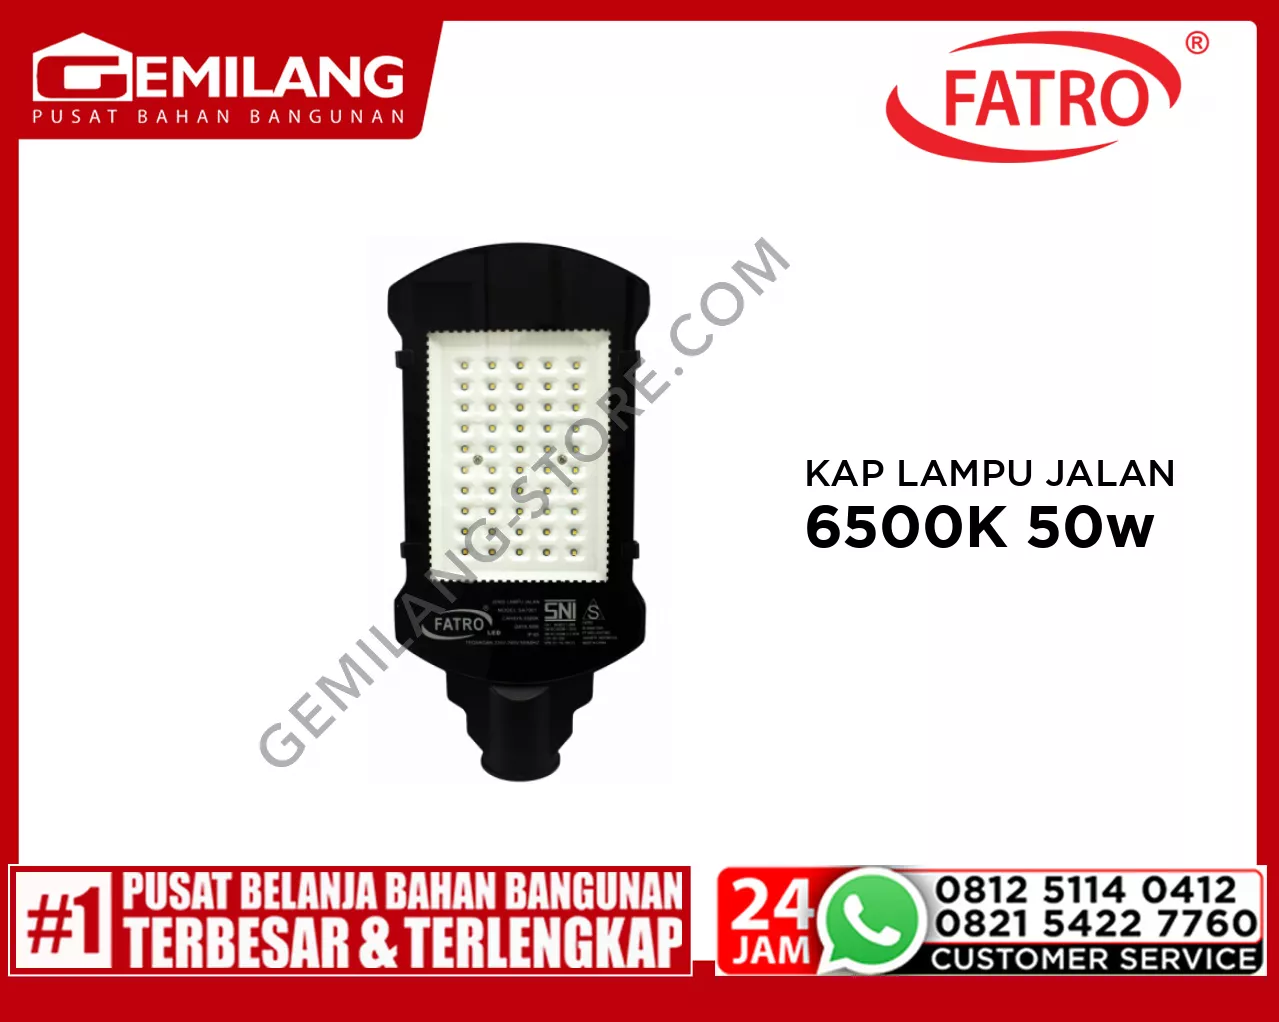 FATRO KAP LAMPU JALAN LED SA-7001 6500K 50w